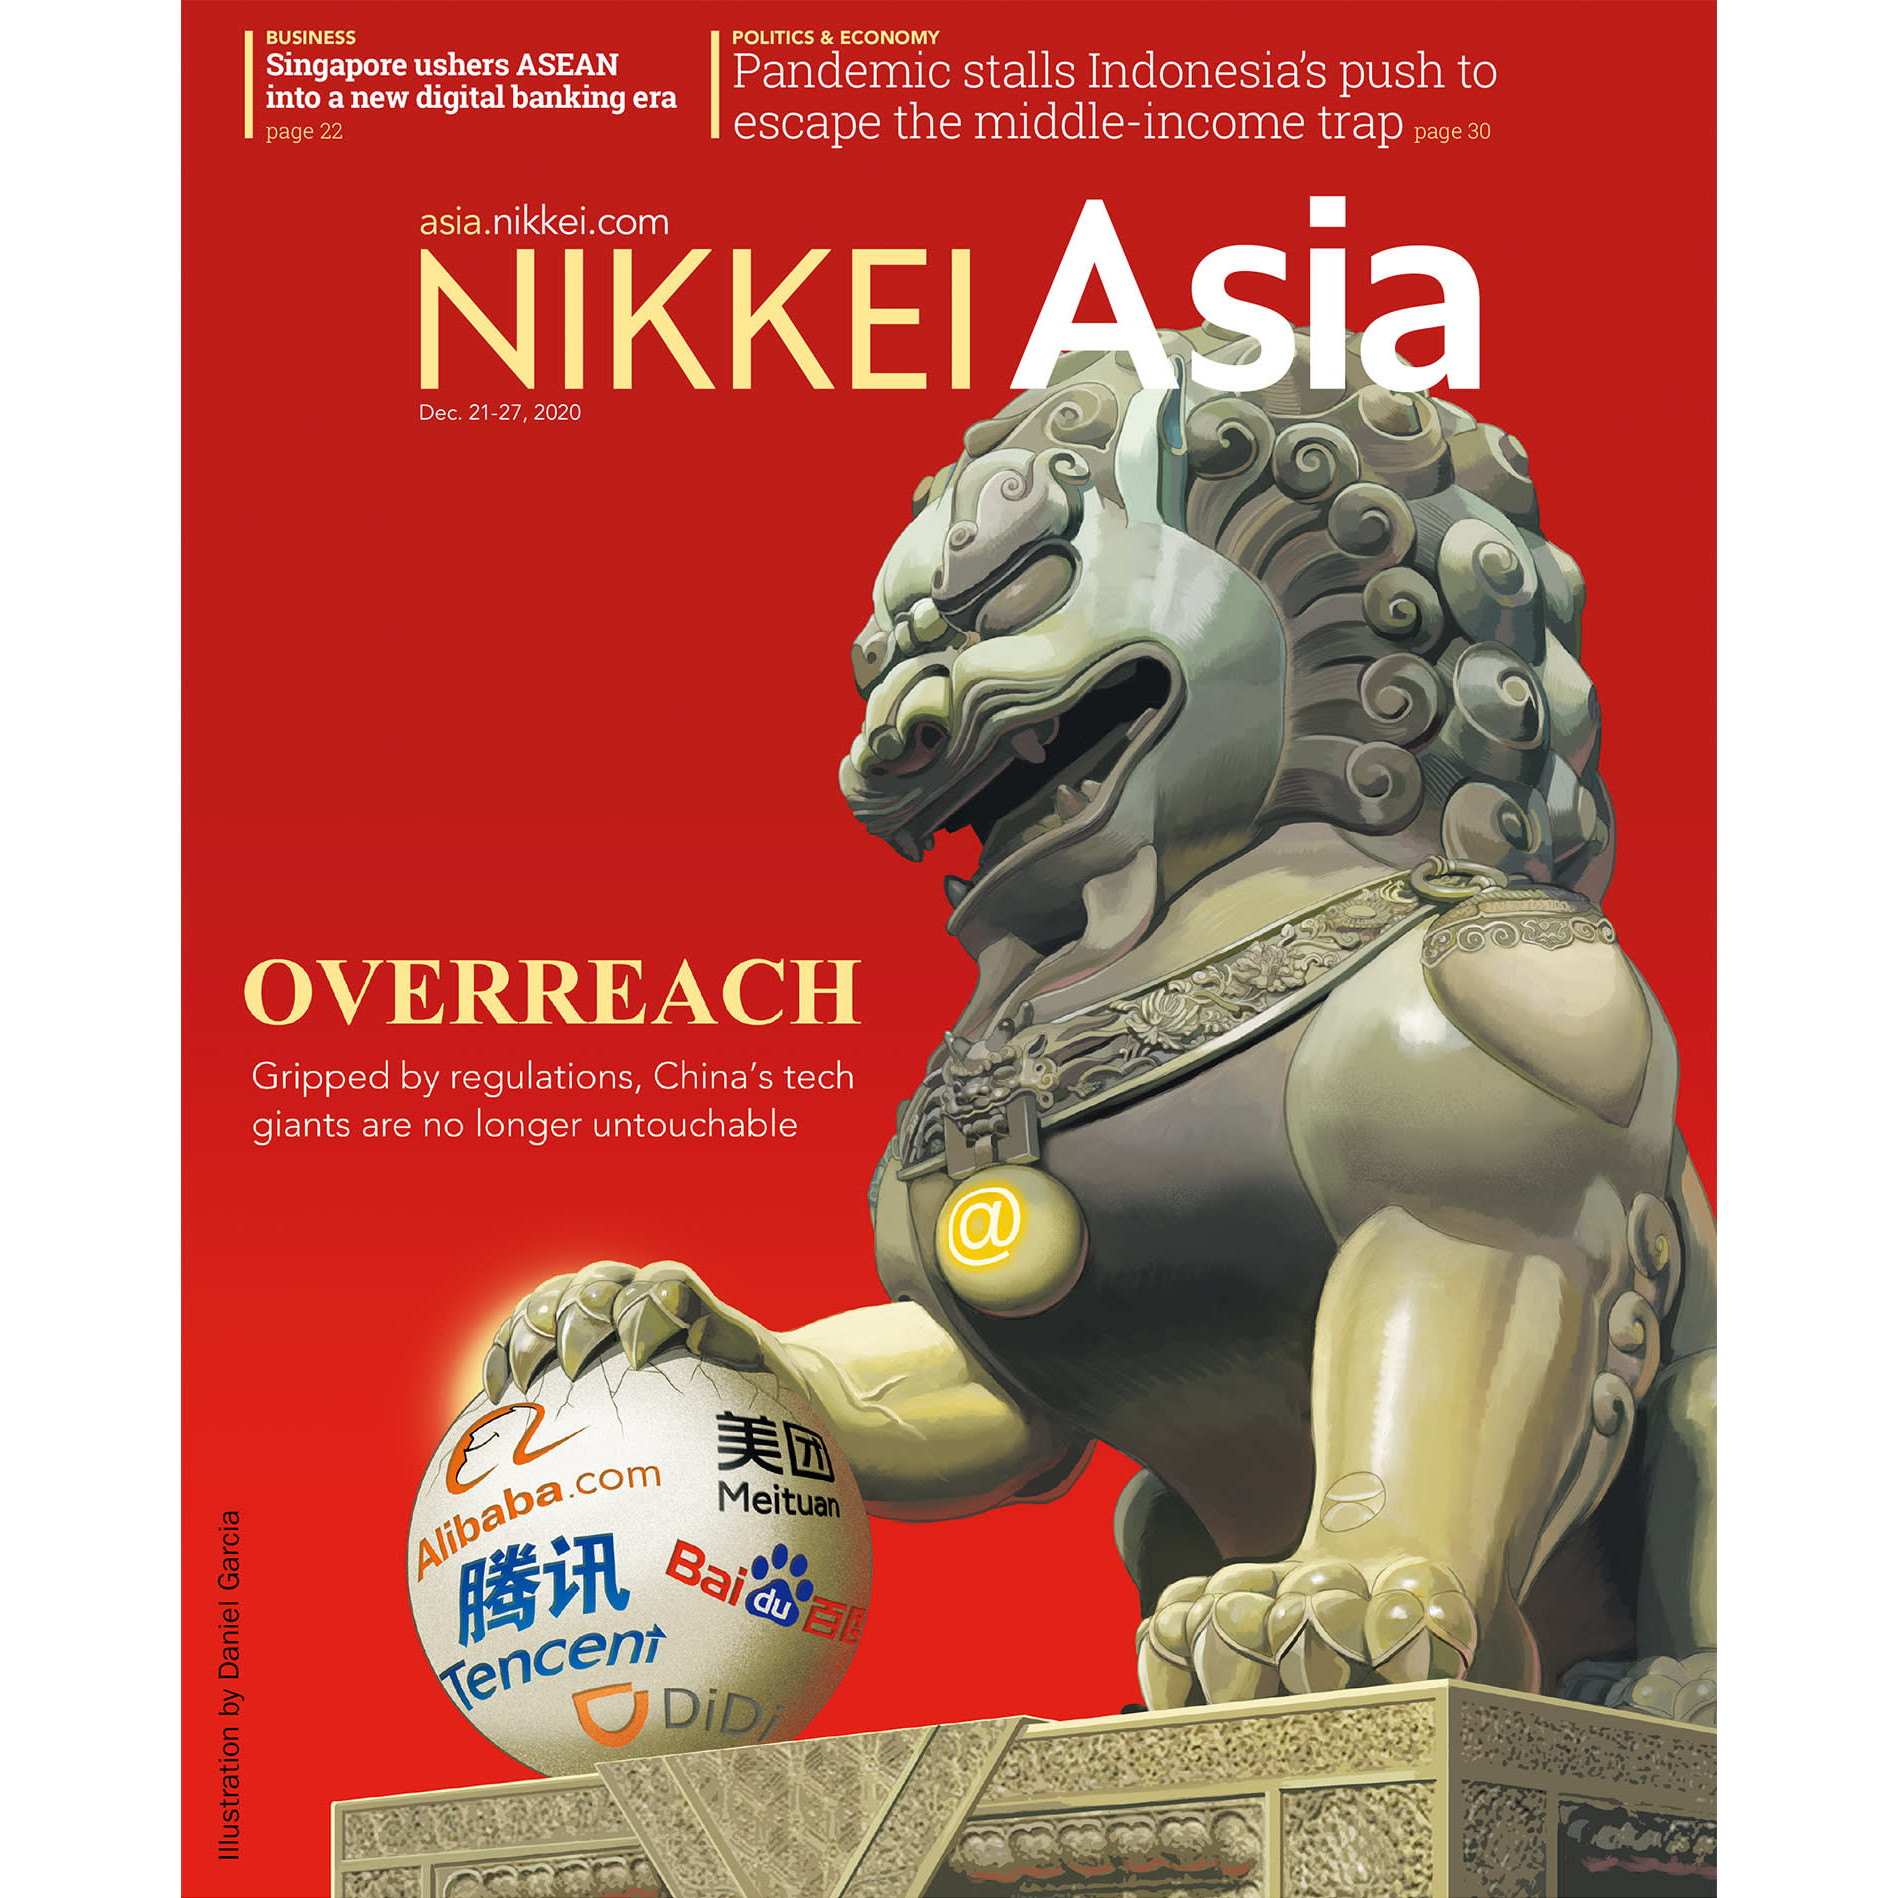 Nikkei Asian Review: Nikkei Asia - OVERREACH - 50.20, tạp chí kinh tế nước ngoài, nhập khẩu từ Singapore